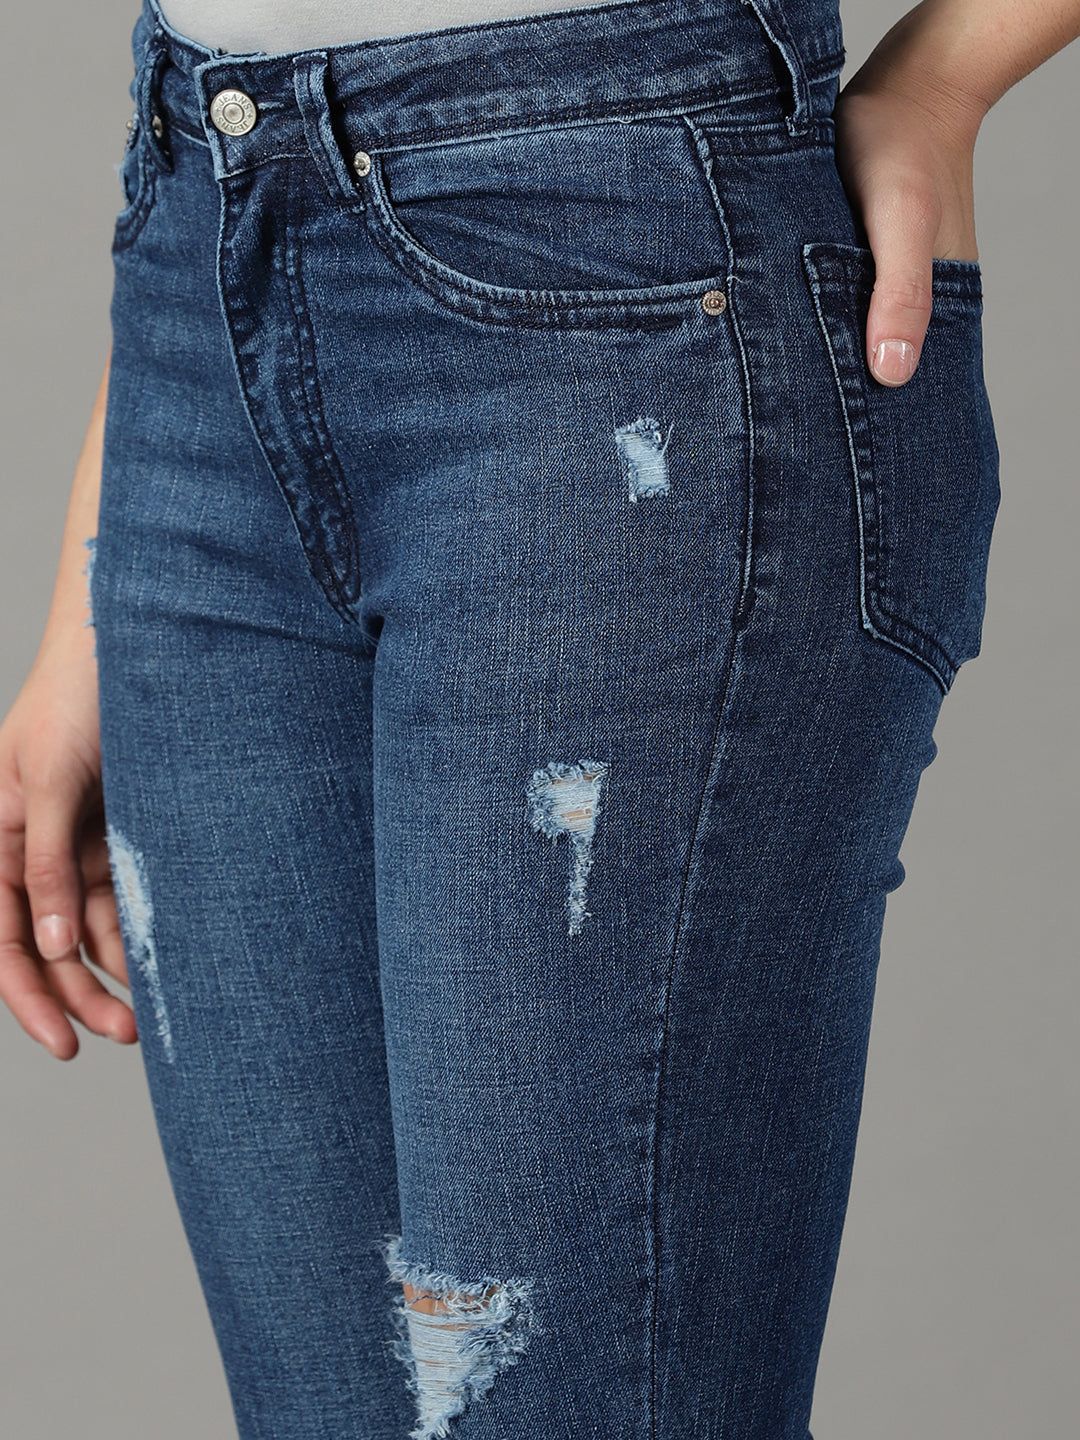 Women's Navy Blue Solid Bootcut Denim Jeans